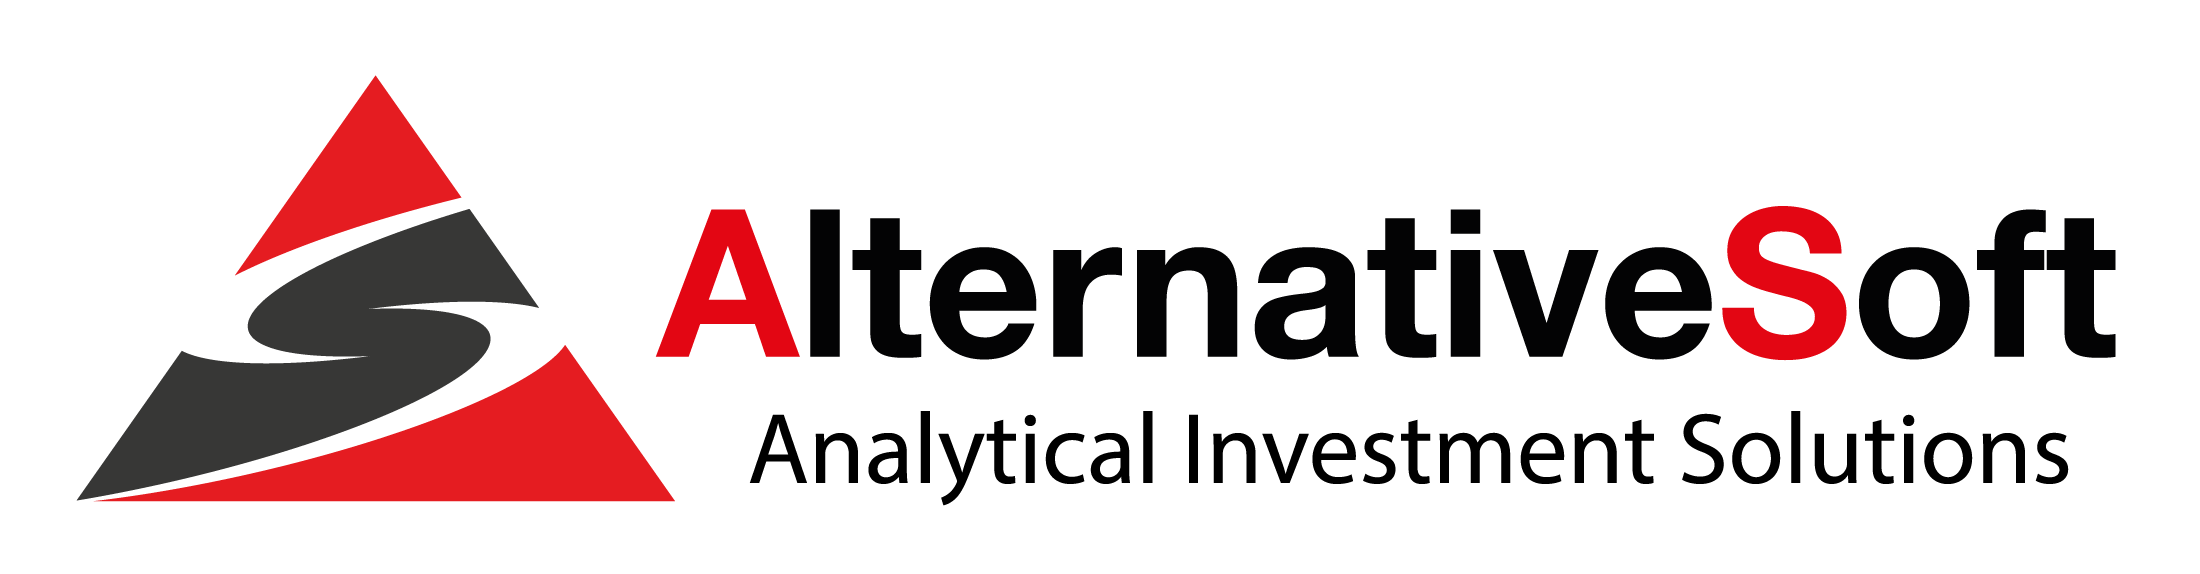 Logo of Alternative Soft, presenter at the Eurekahedge Asian Hedge Fund Awards 2019